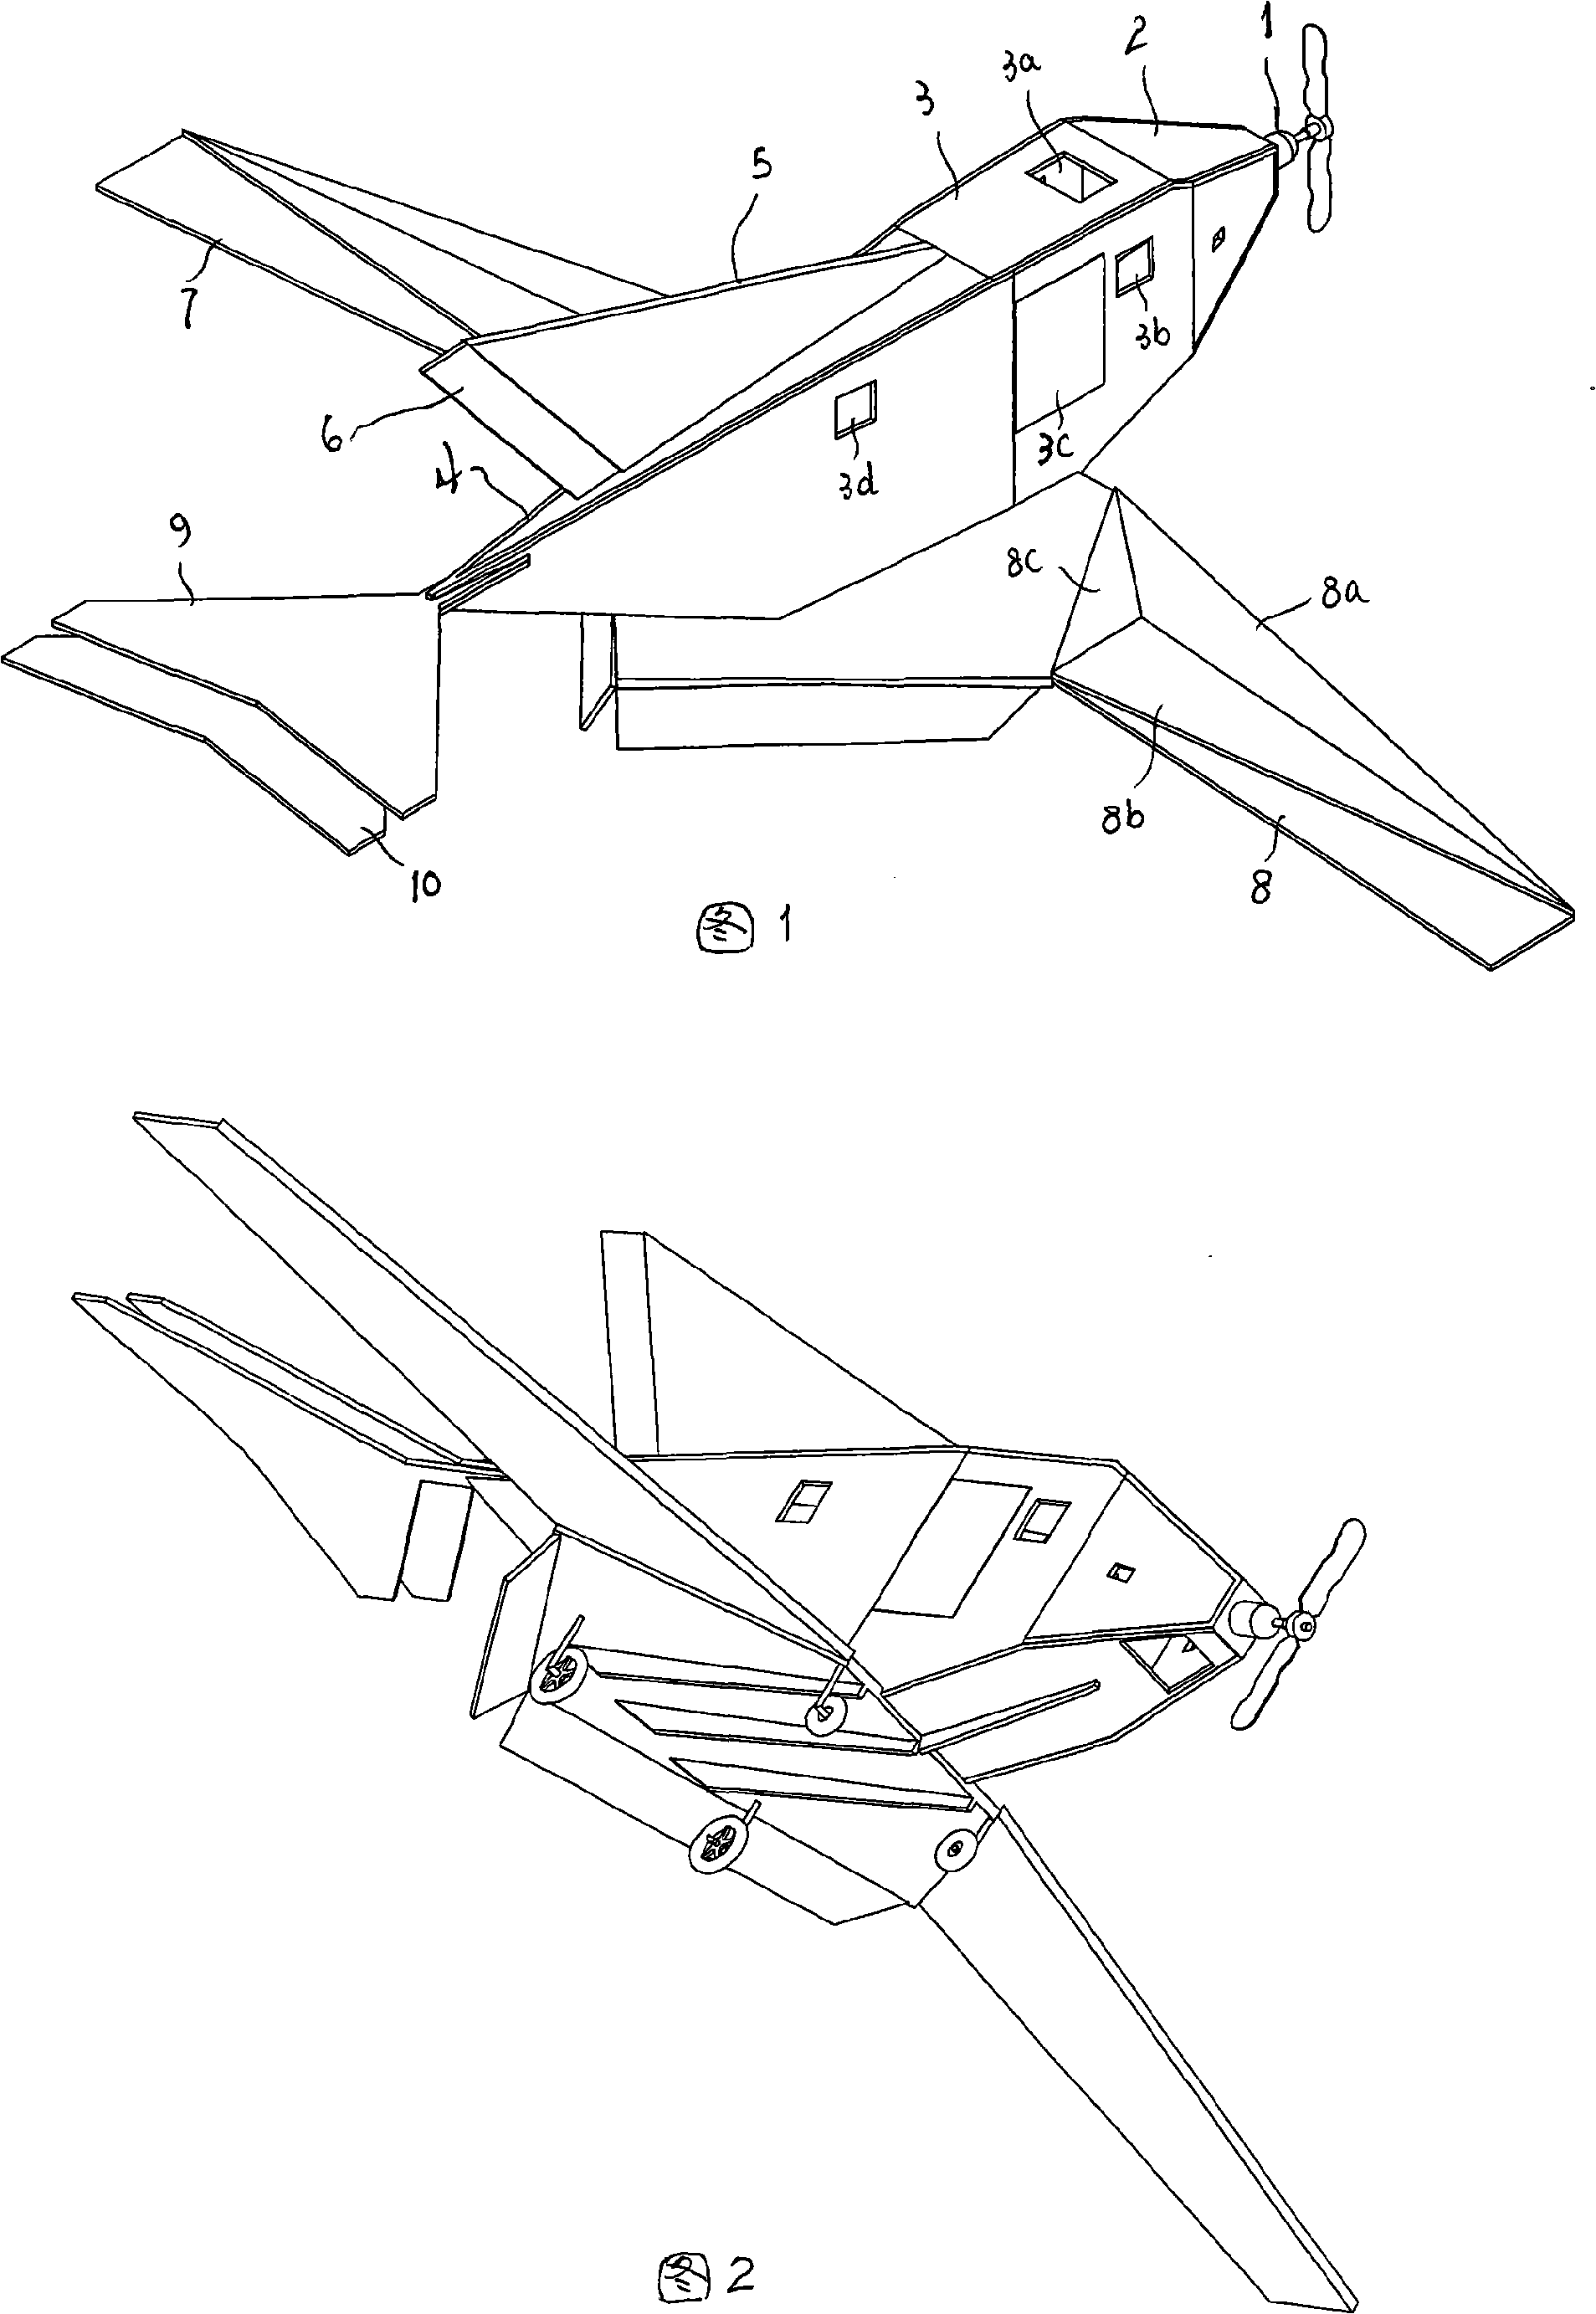 Aeroamphibious triphibian aircraft